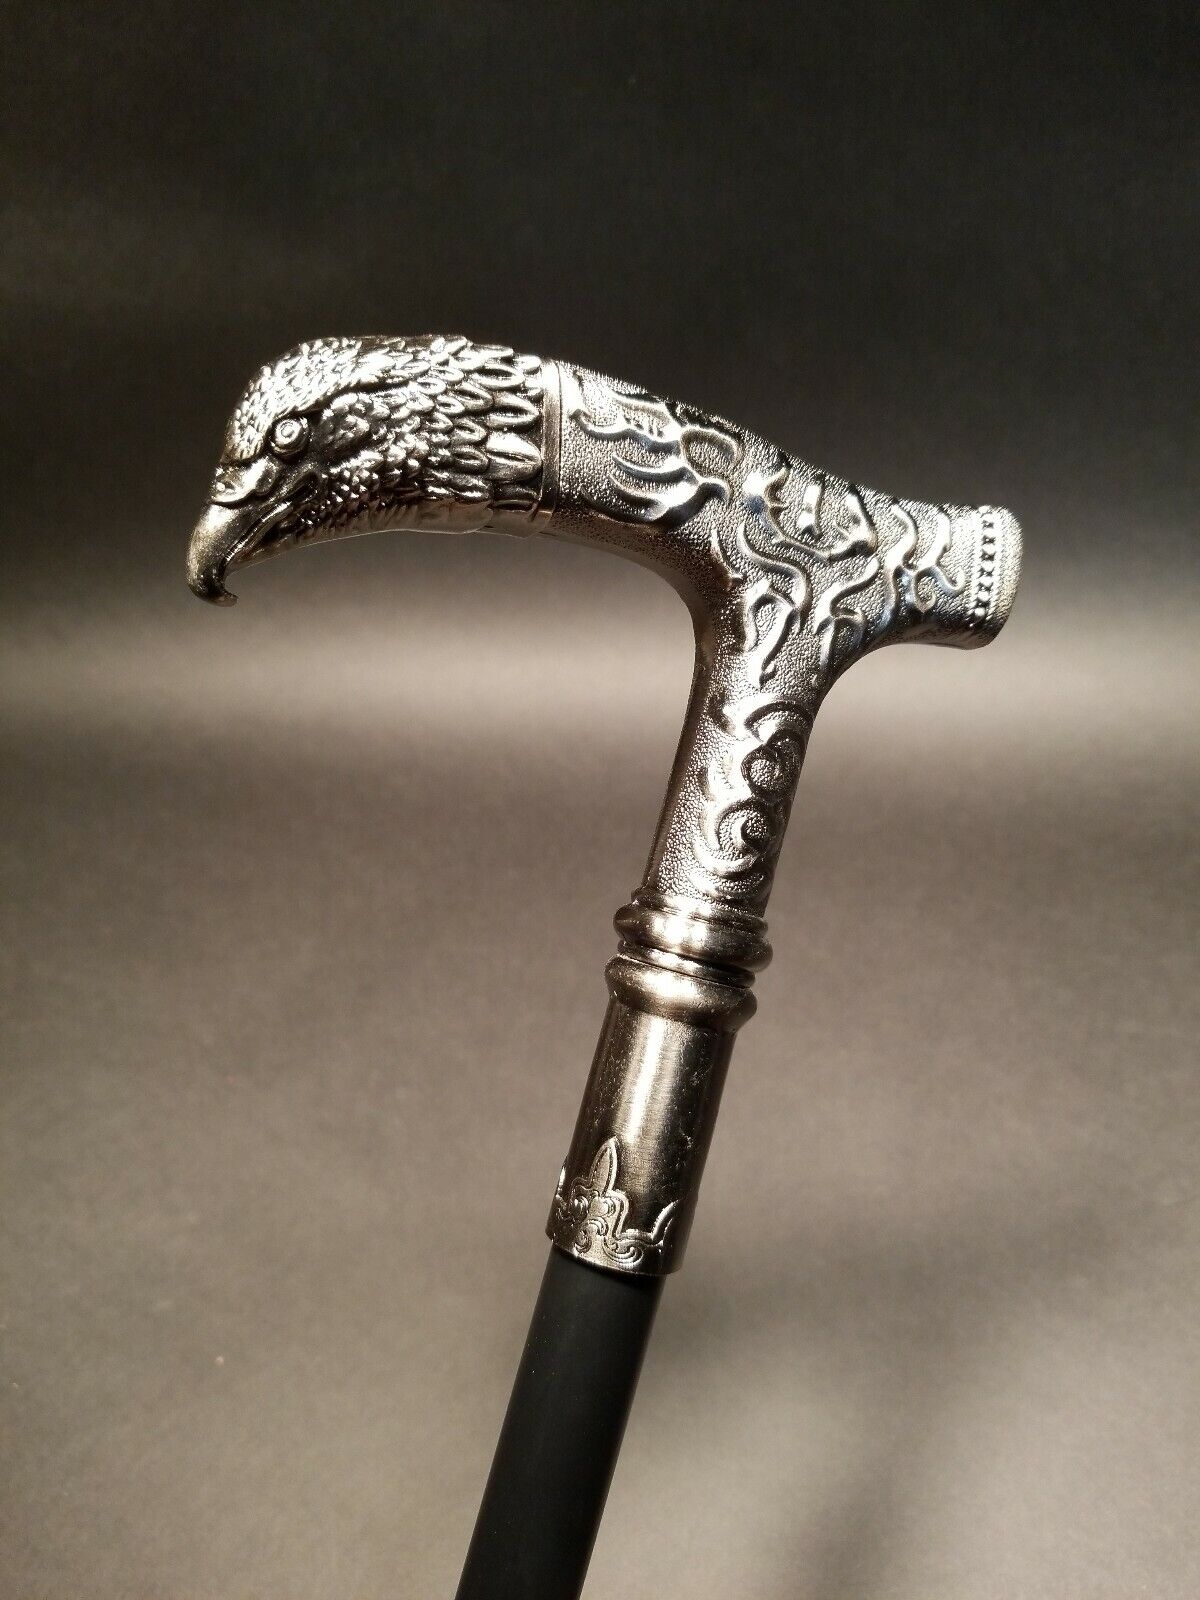 35" Vintage Antique Style Eagle Metal Walking Stick Cane